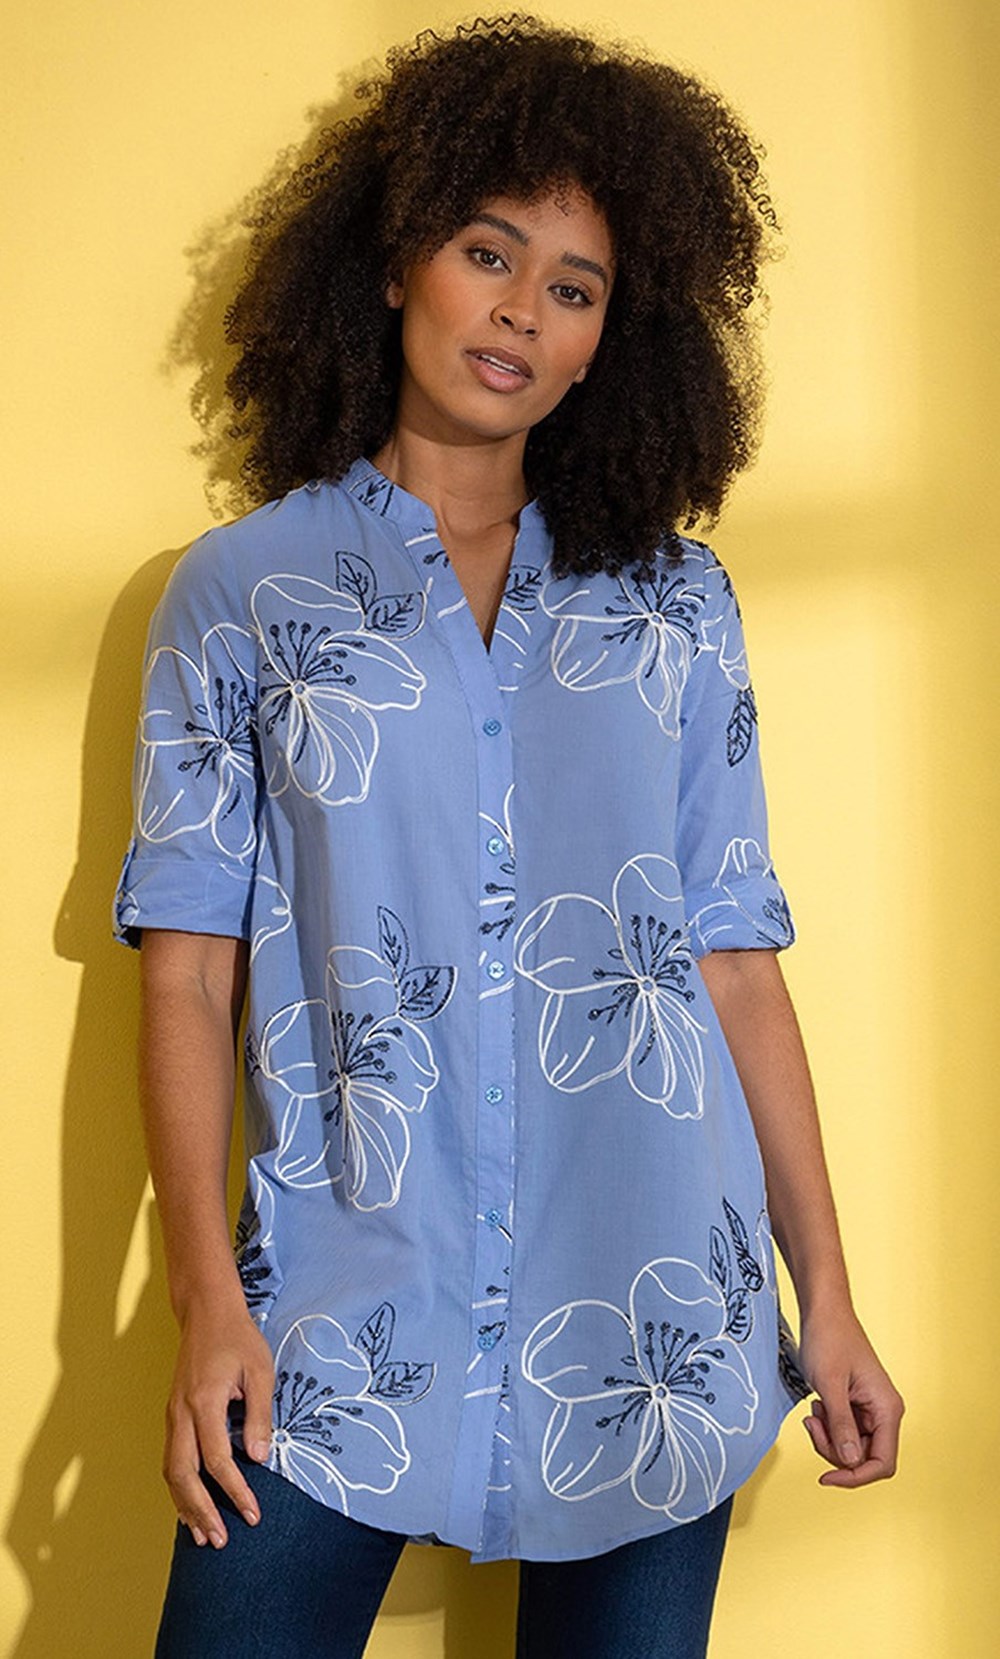 Brands - Klass Floral Shimmer Embroidered Cotton Shirt Blue/White Women’s